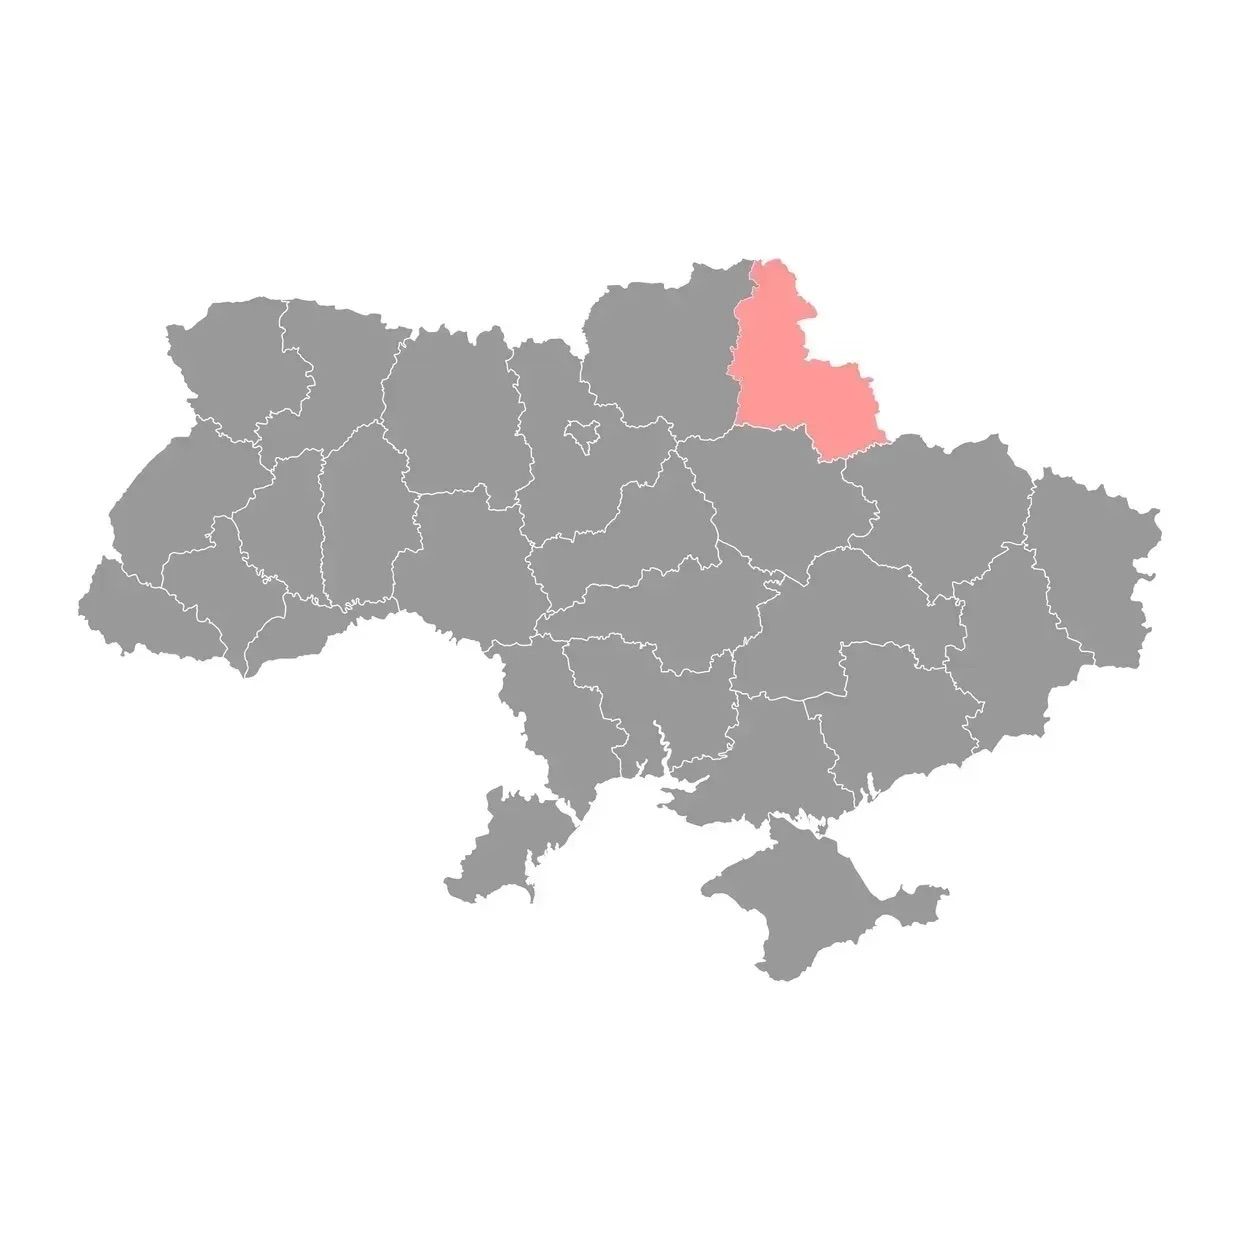 Russia attacks 7 communities in Sumy Oblast, killing 1